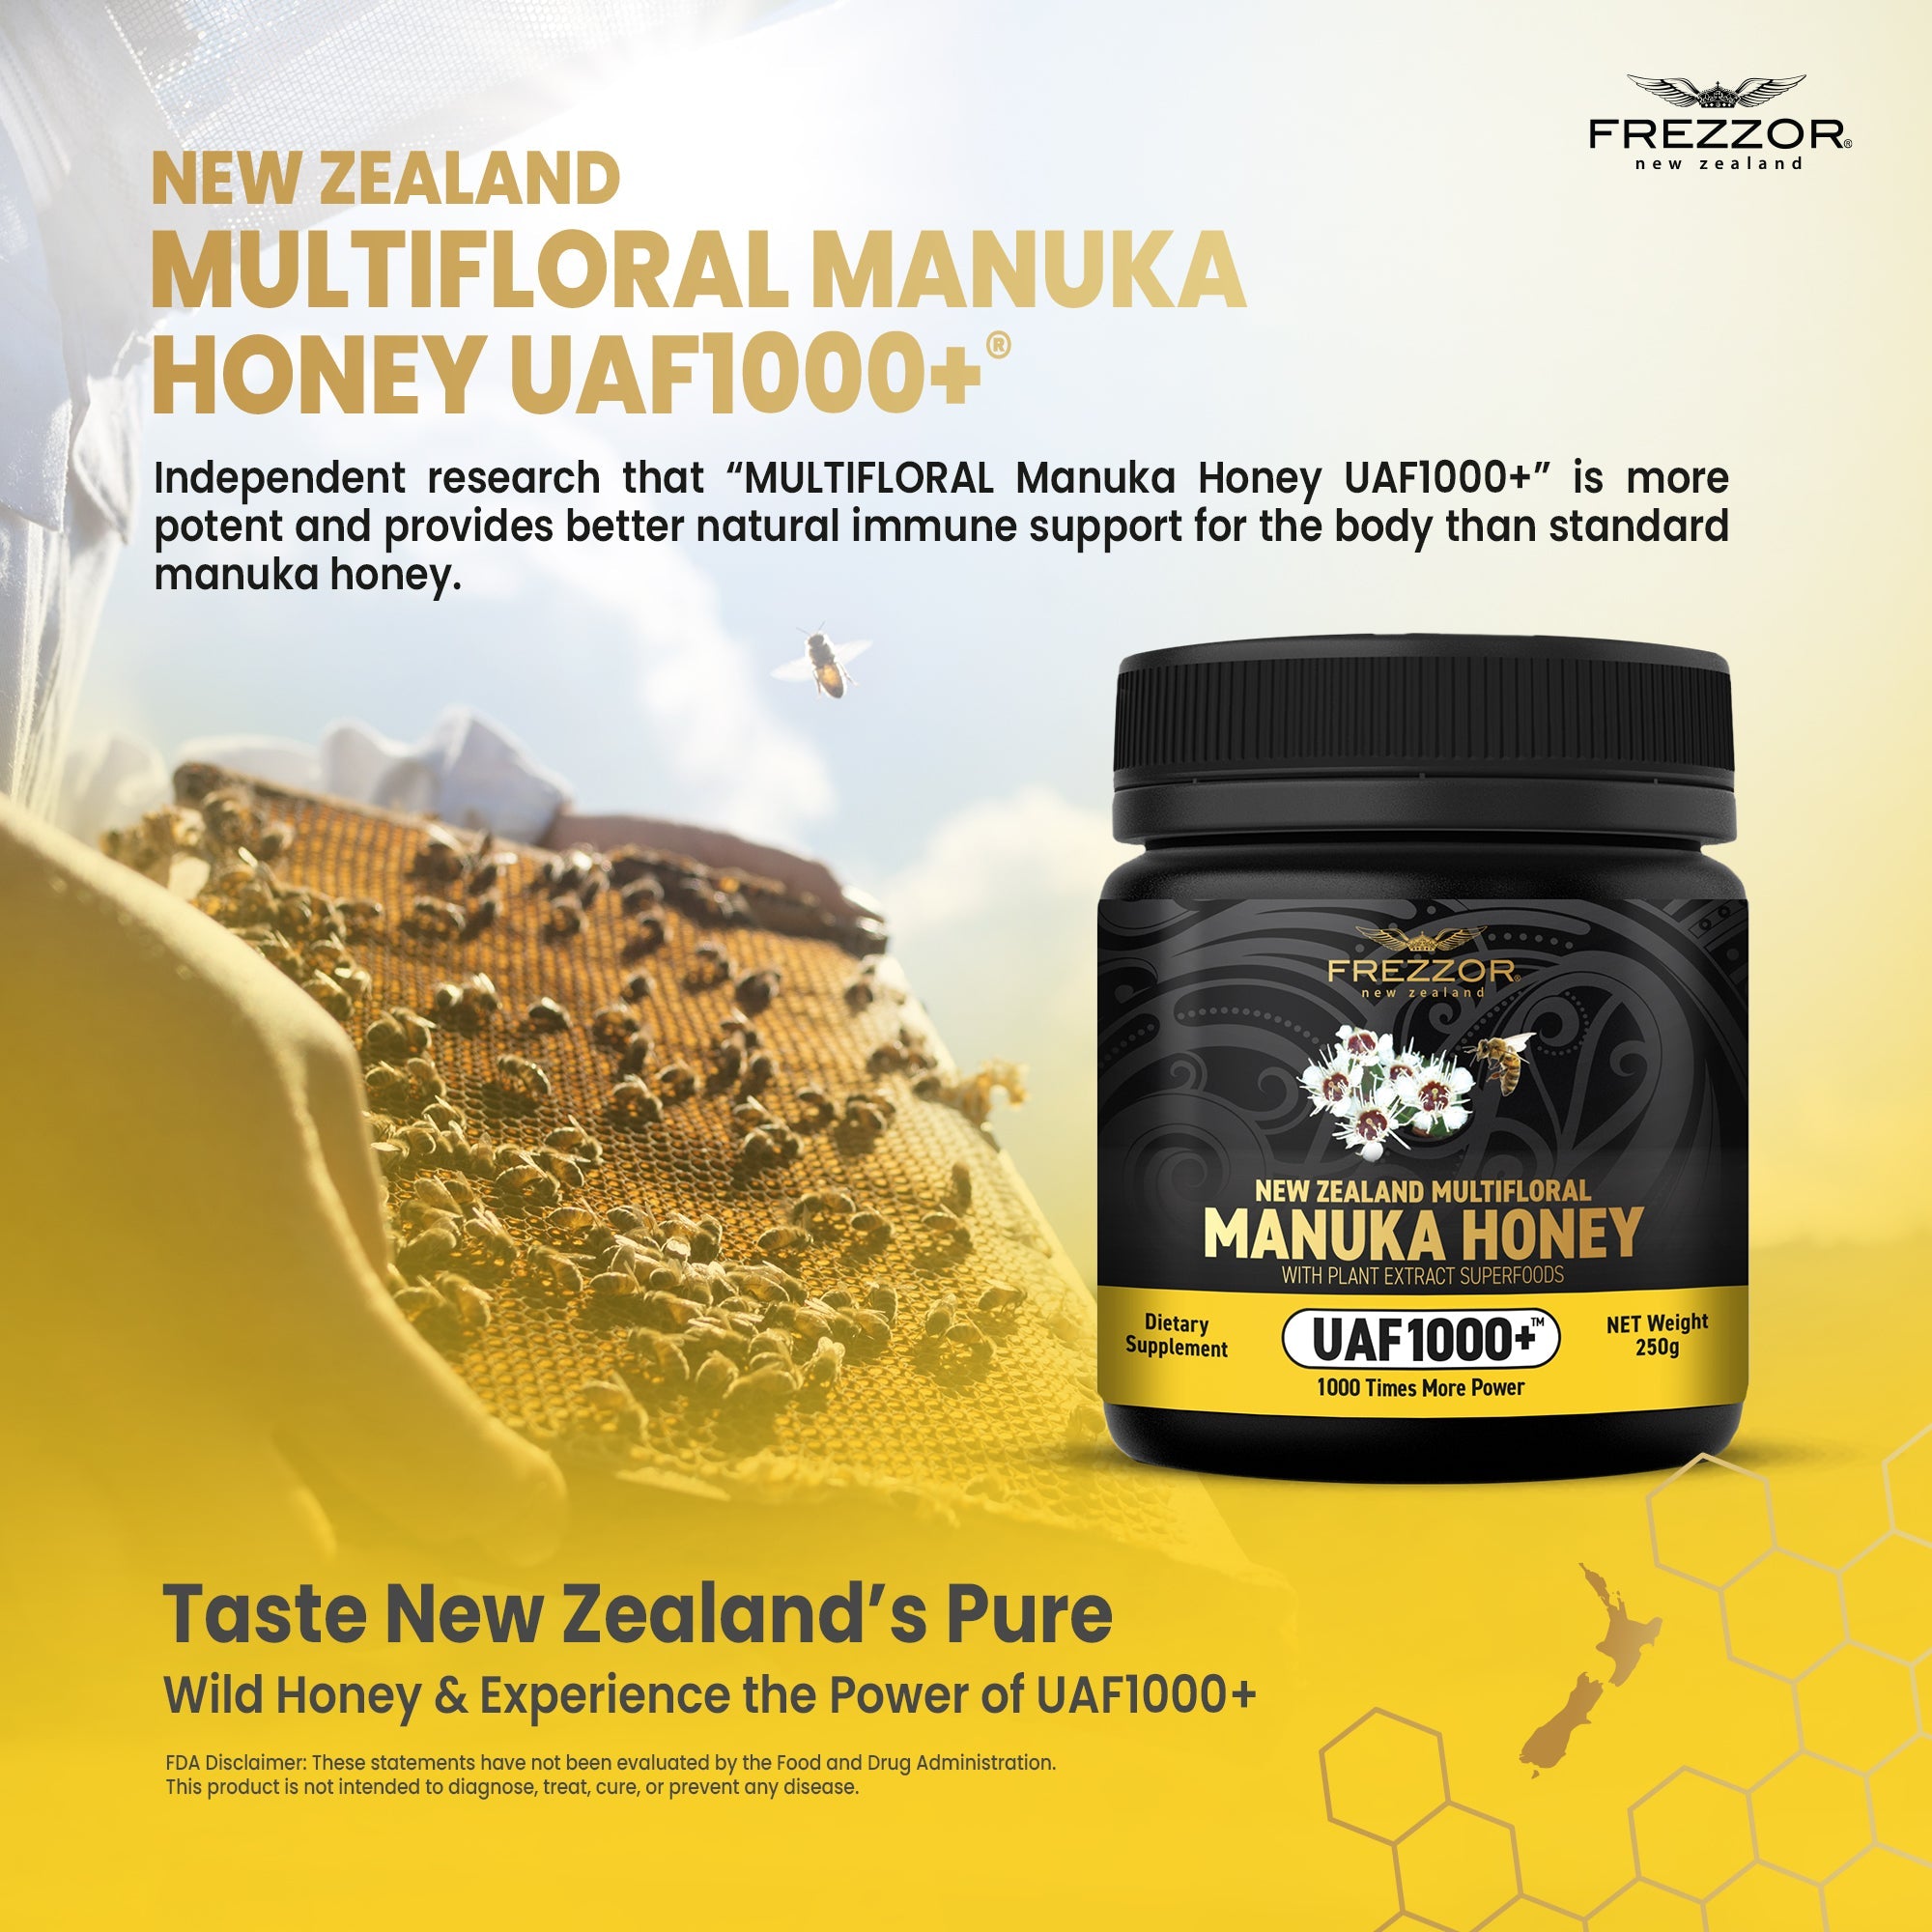 Multifloral Manuka Honey UAF1000+™